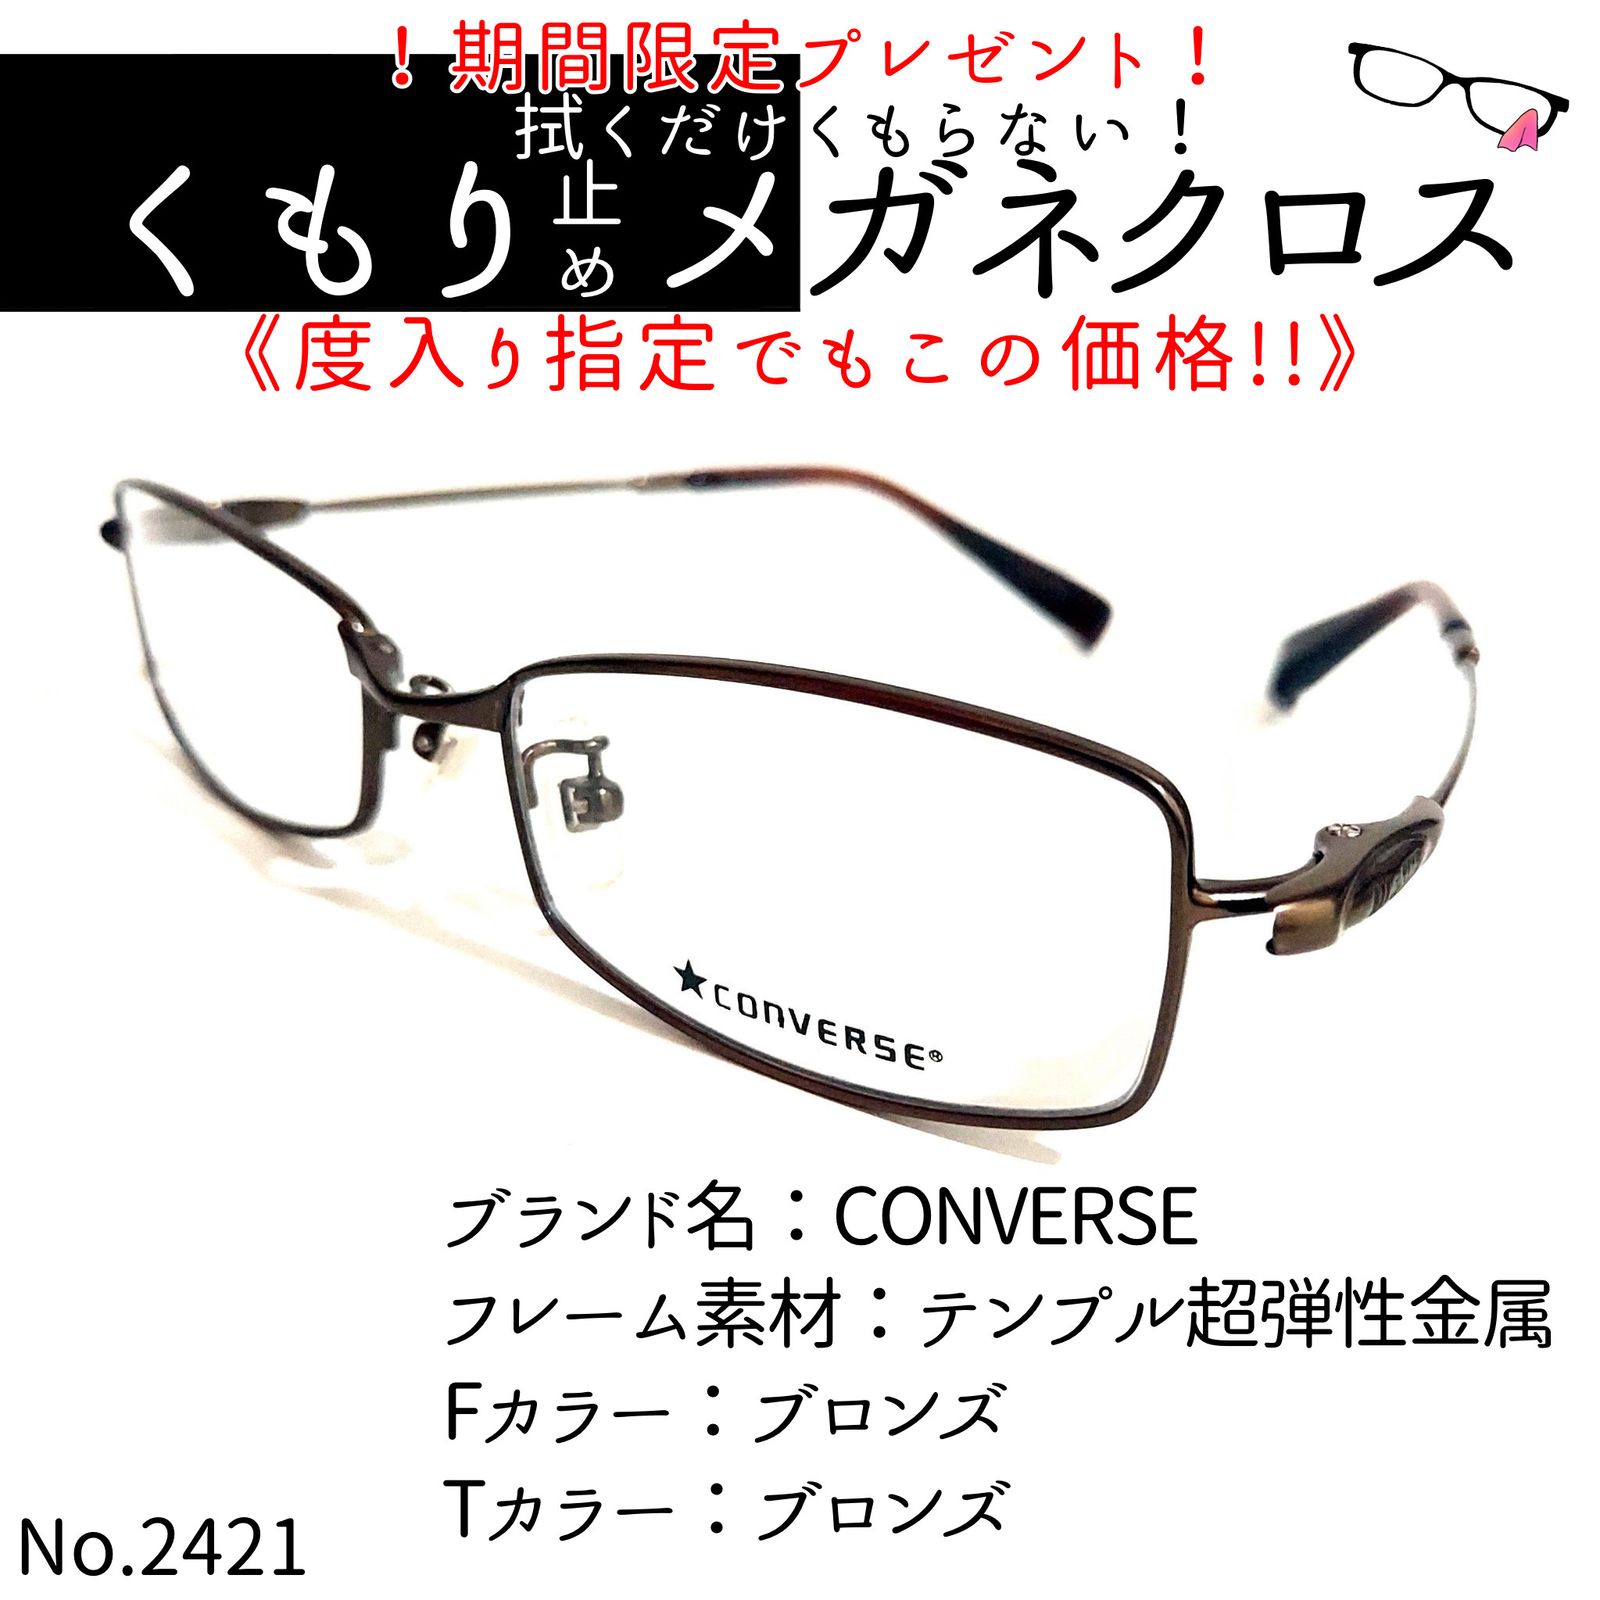 No.2421+メガネ CONVERSE【度数入り込み価格】 - メルカリ